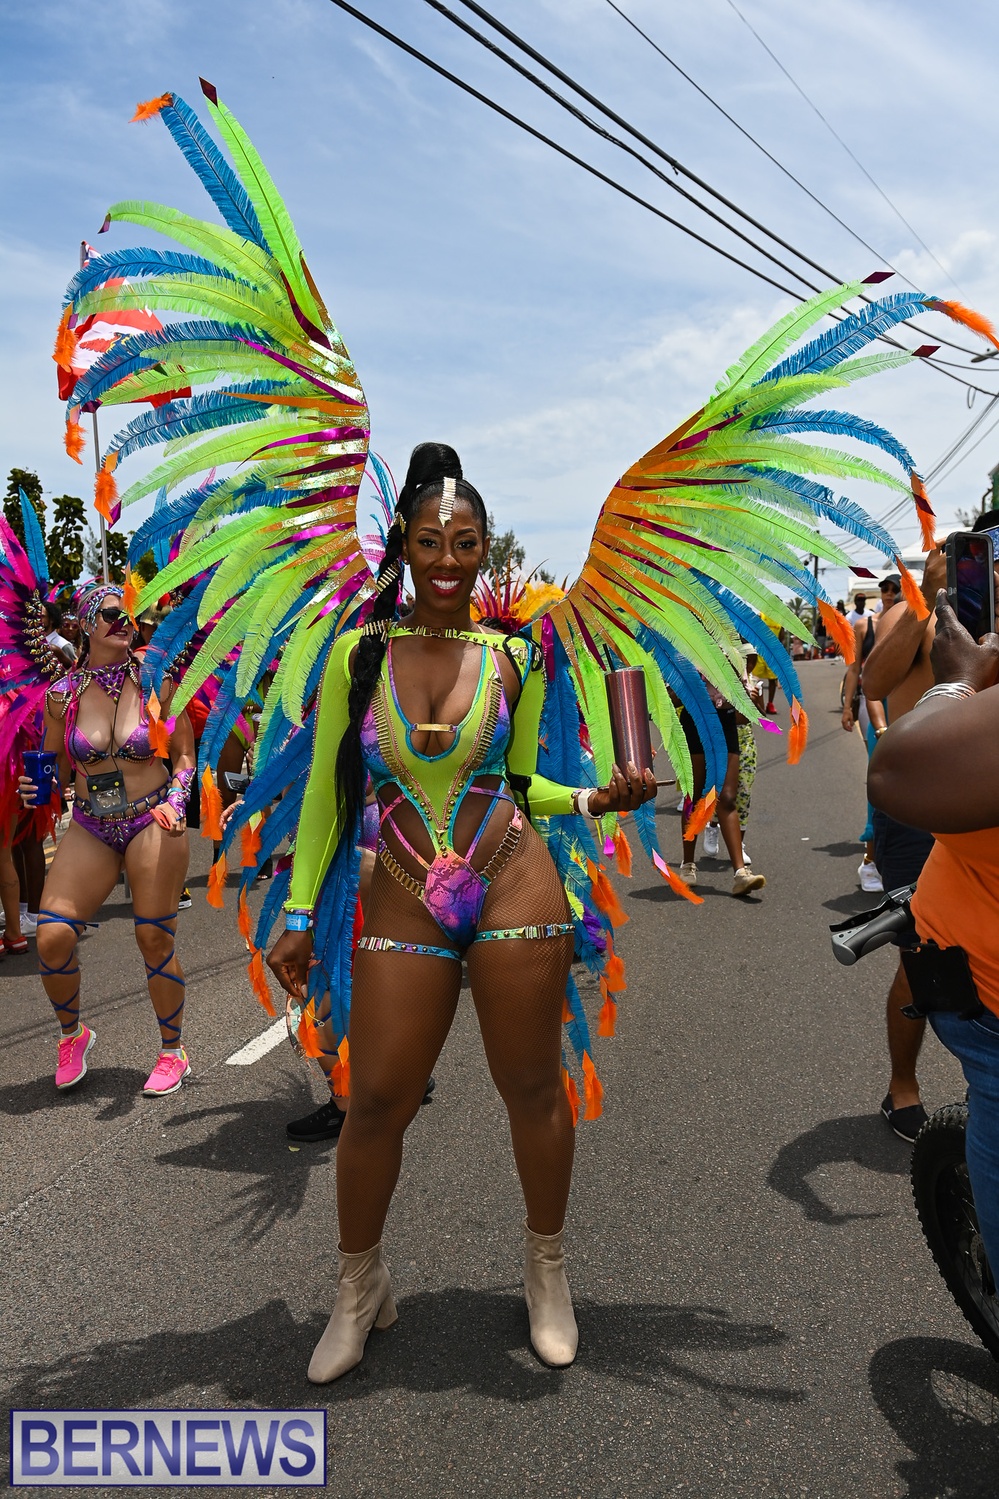 Carnival in Bermuda ‘Revel de Road’ event  party June 2022 AW (31)